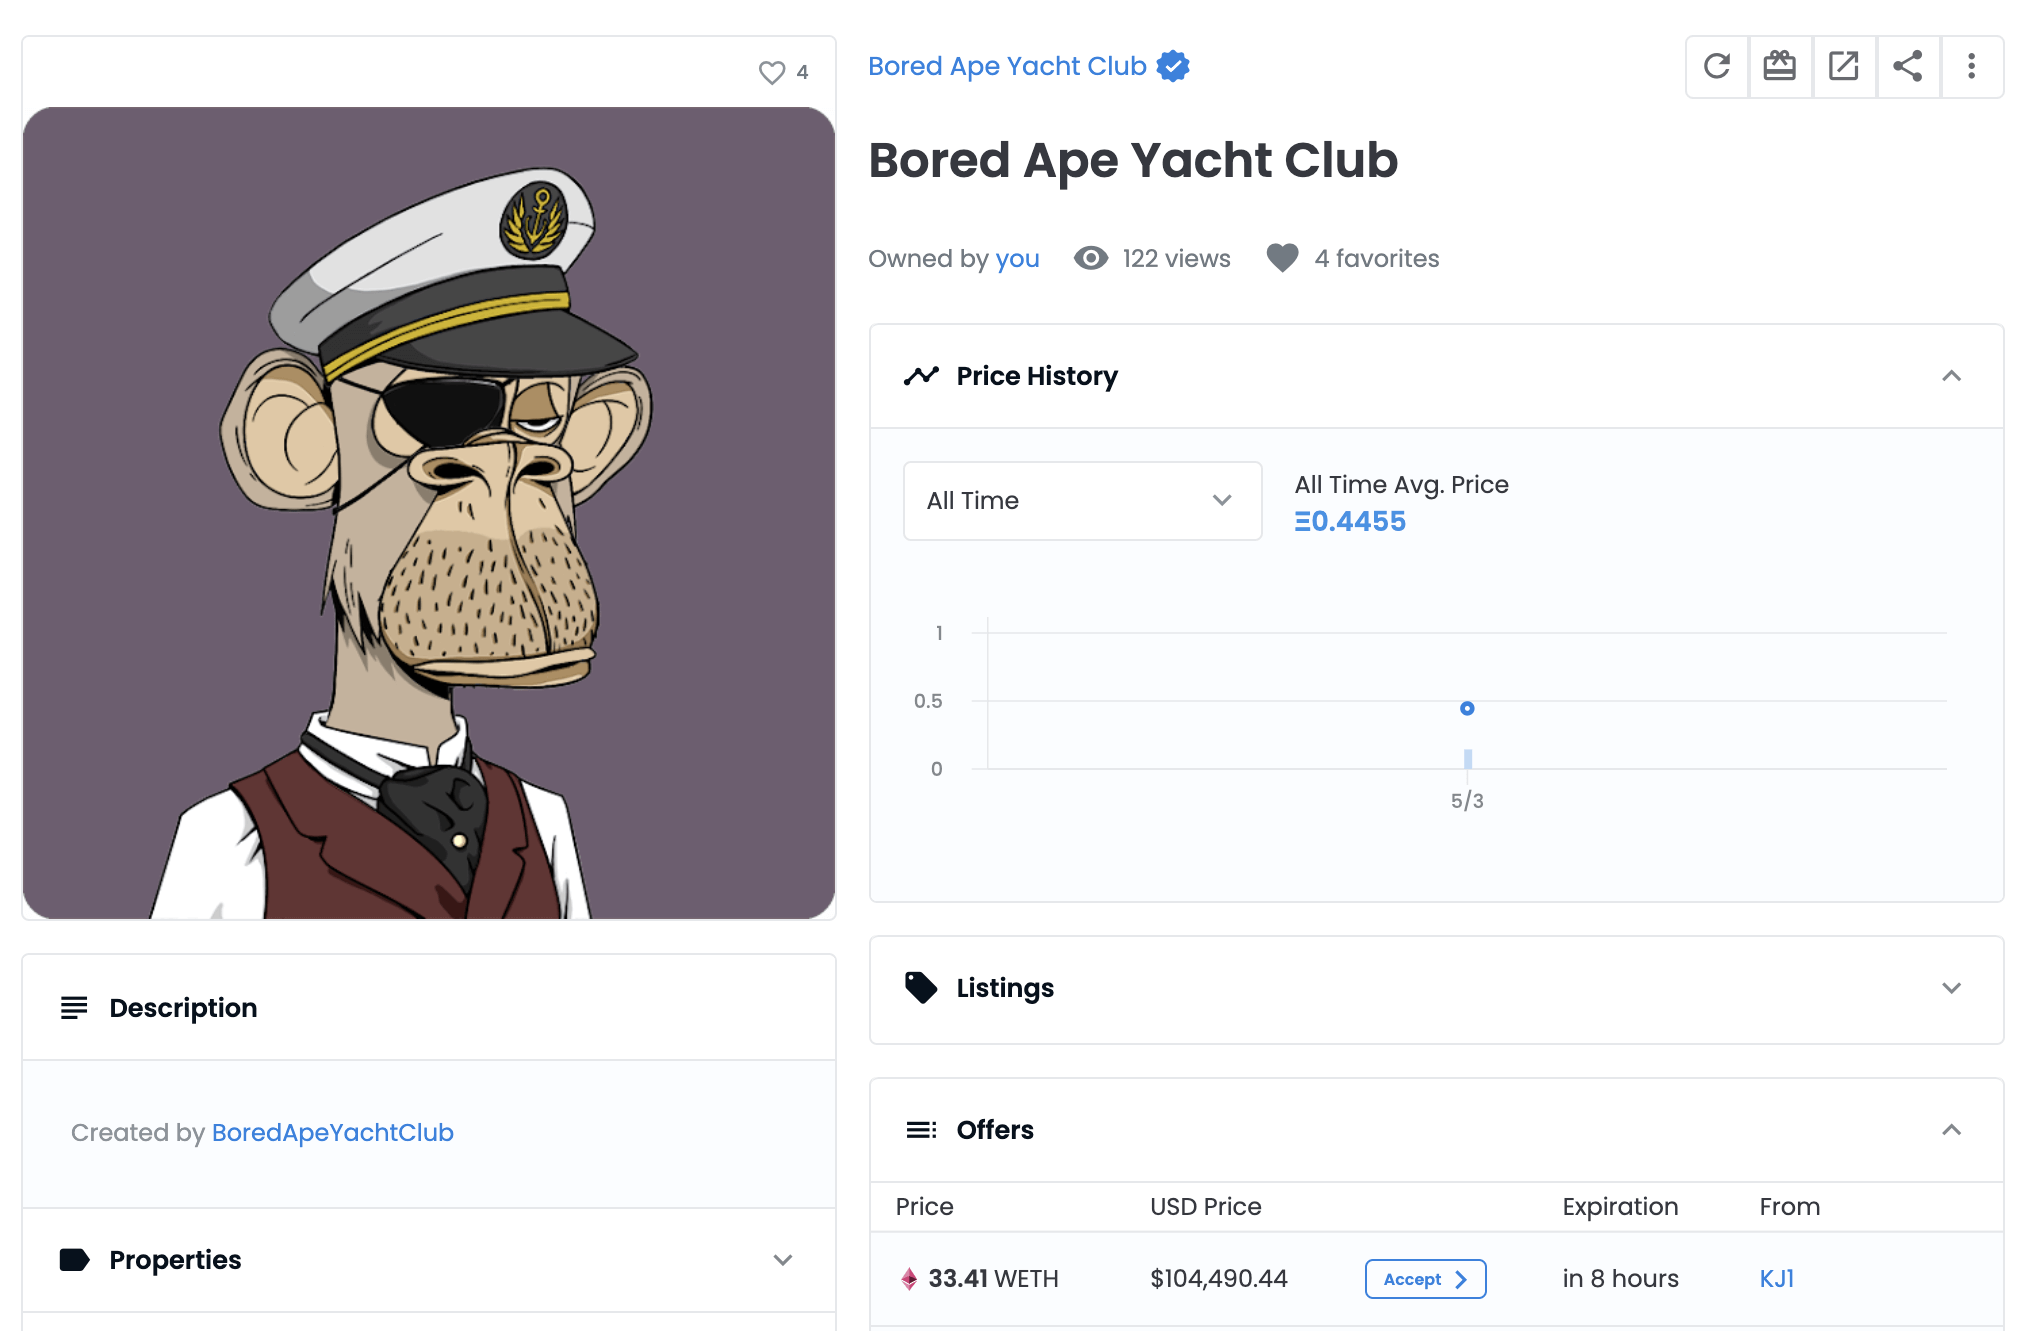 Captain Morgan Bored Ape Yacht Club